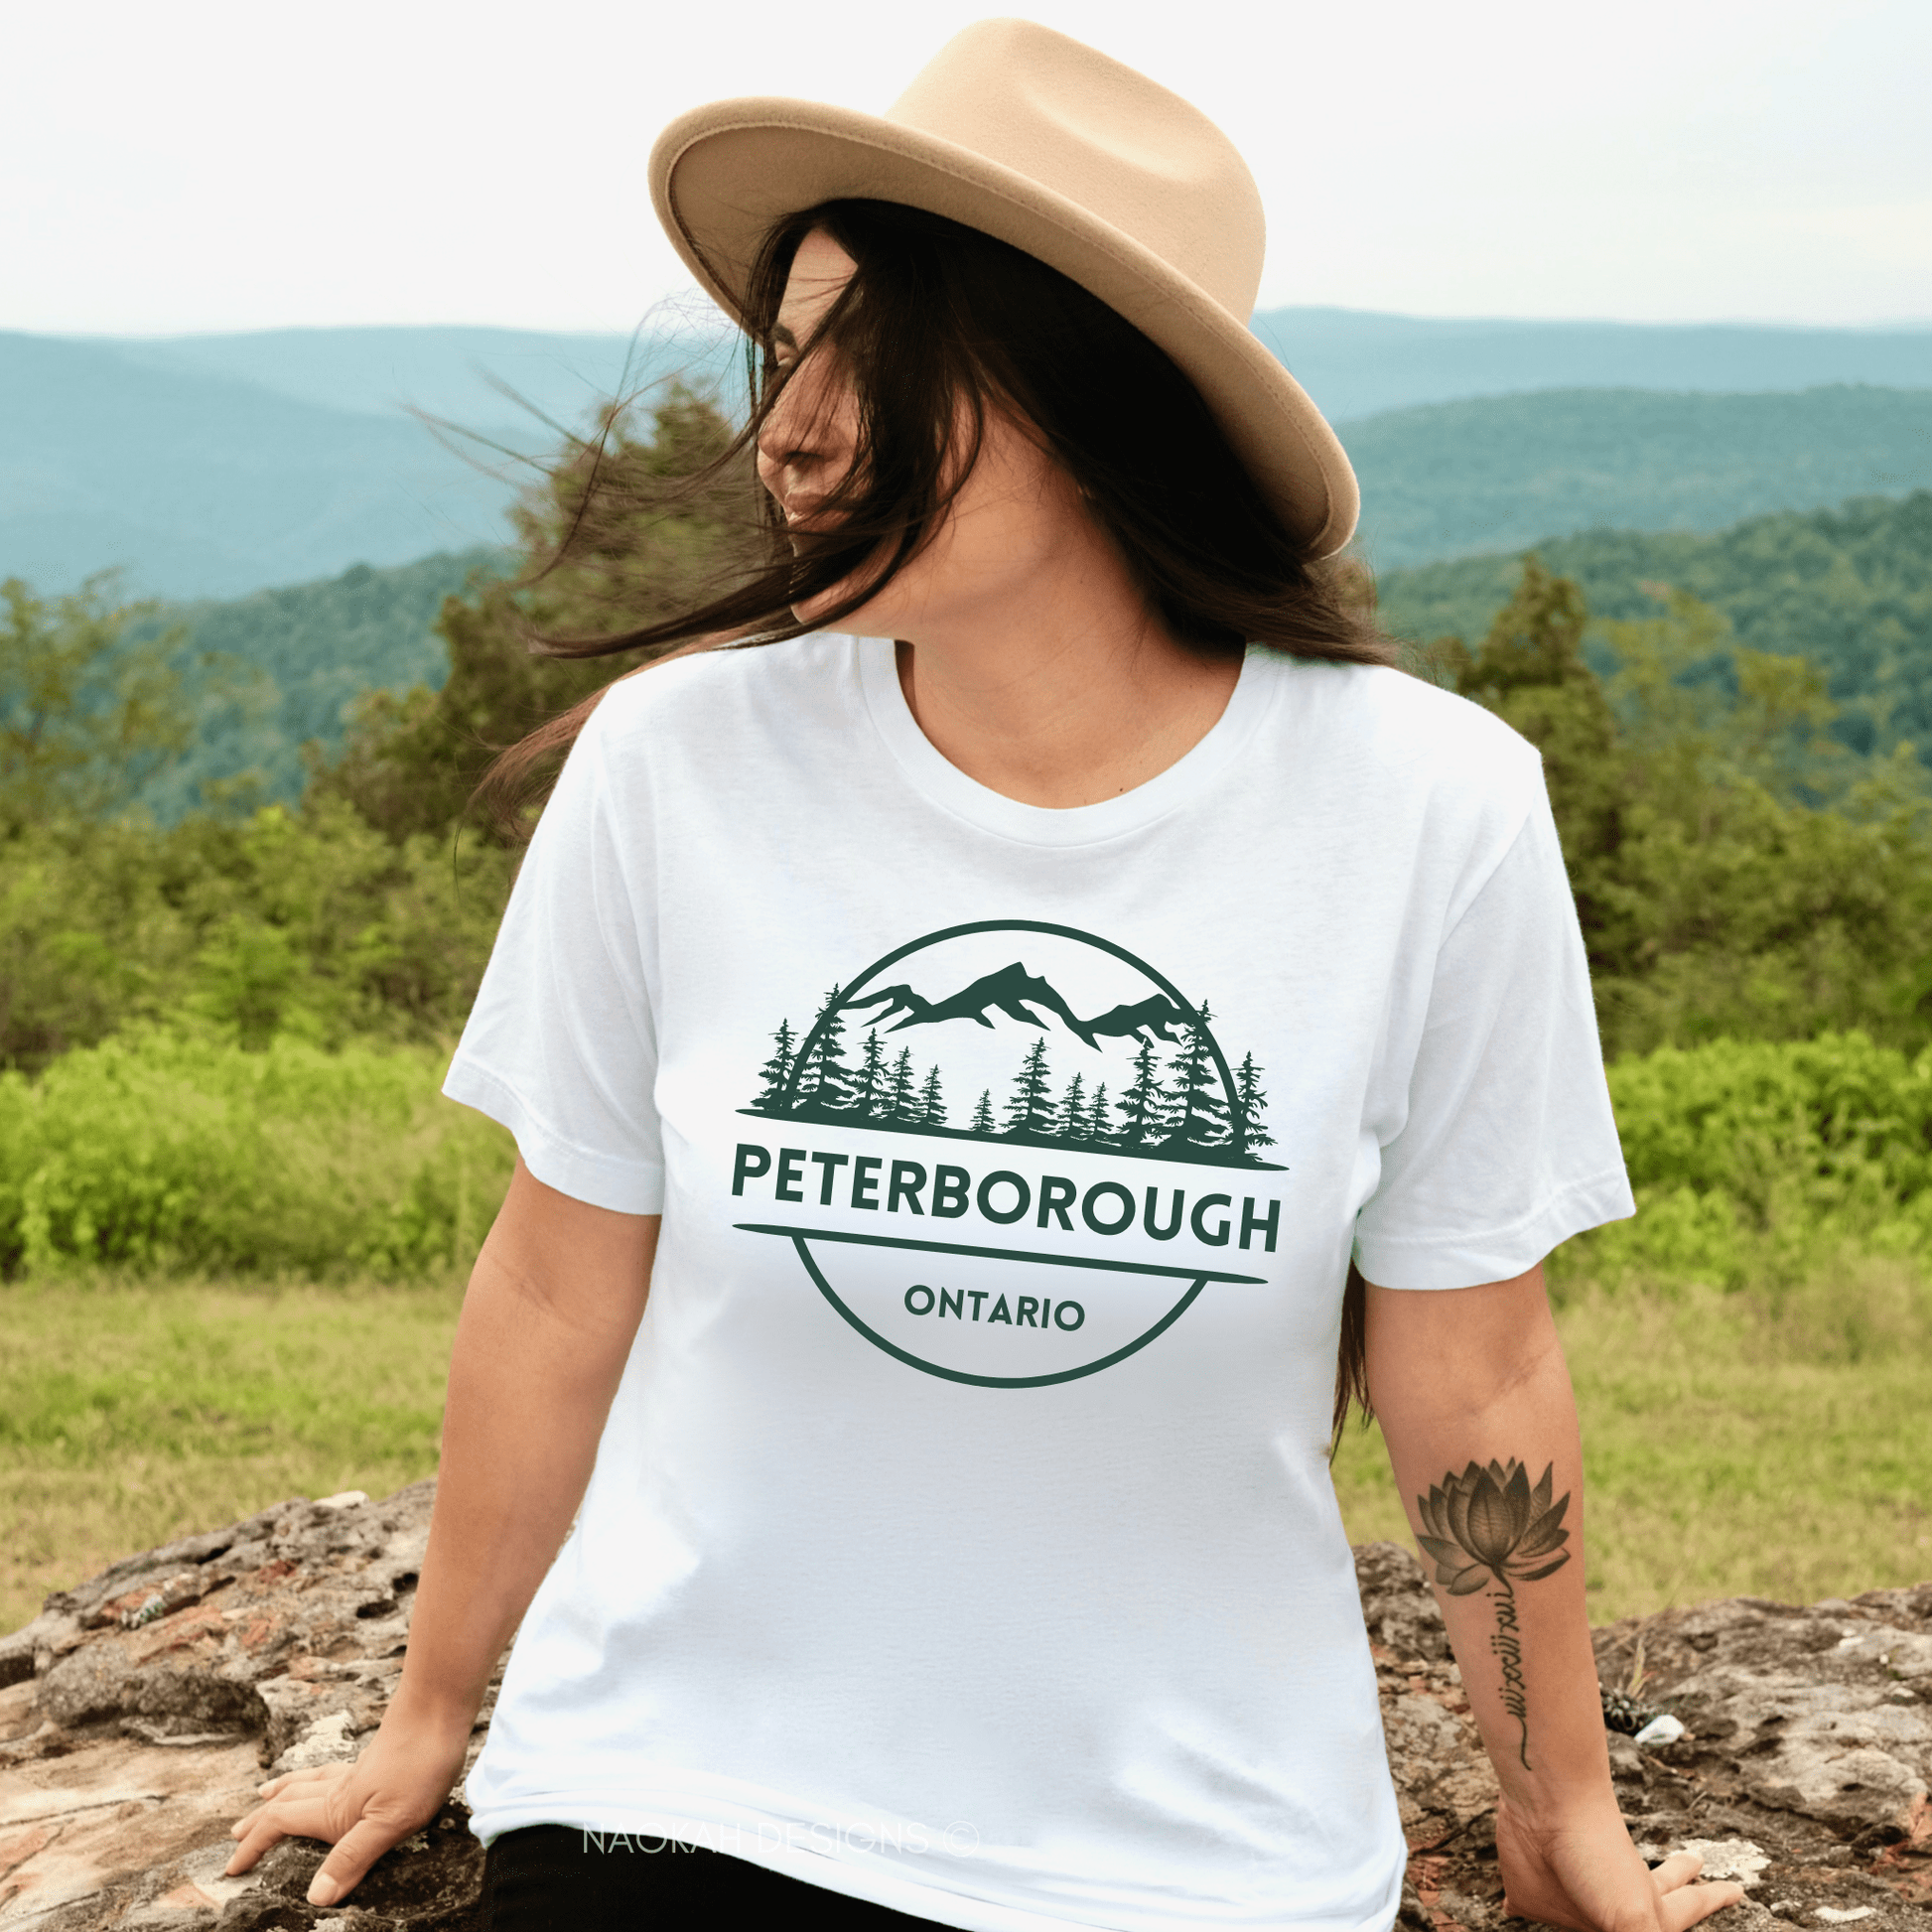 peterborough Ontario shirt, Kawartha's shirt, Ontario shirt, Peterborough shirt, Kawartha lakes, trent, nature shirt, outdoor shirt, landscape shirt, cottage country shirt